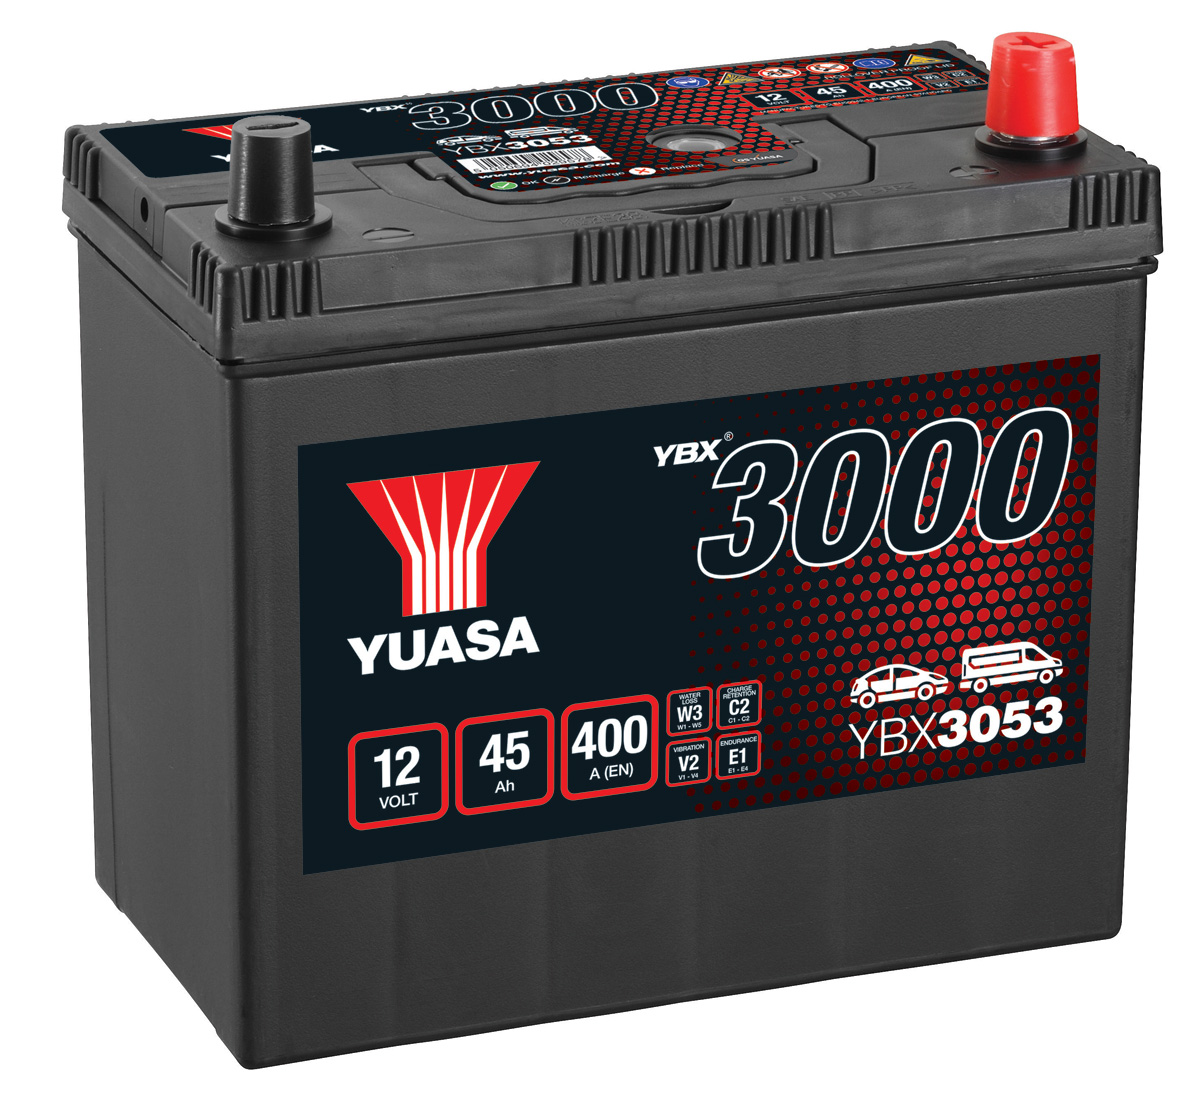 Yuasa YBX3053 053 Type 12V 45Ah Car Battery